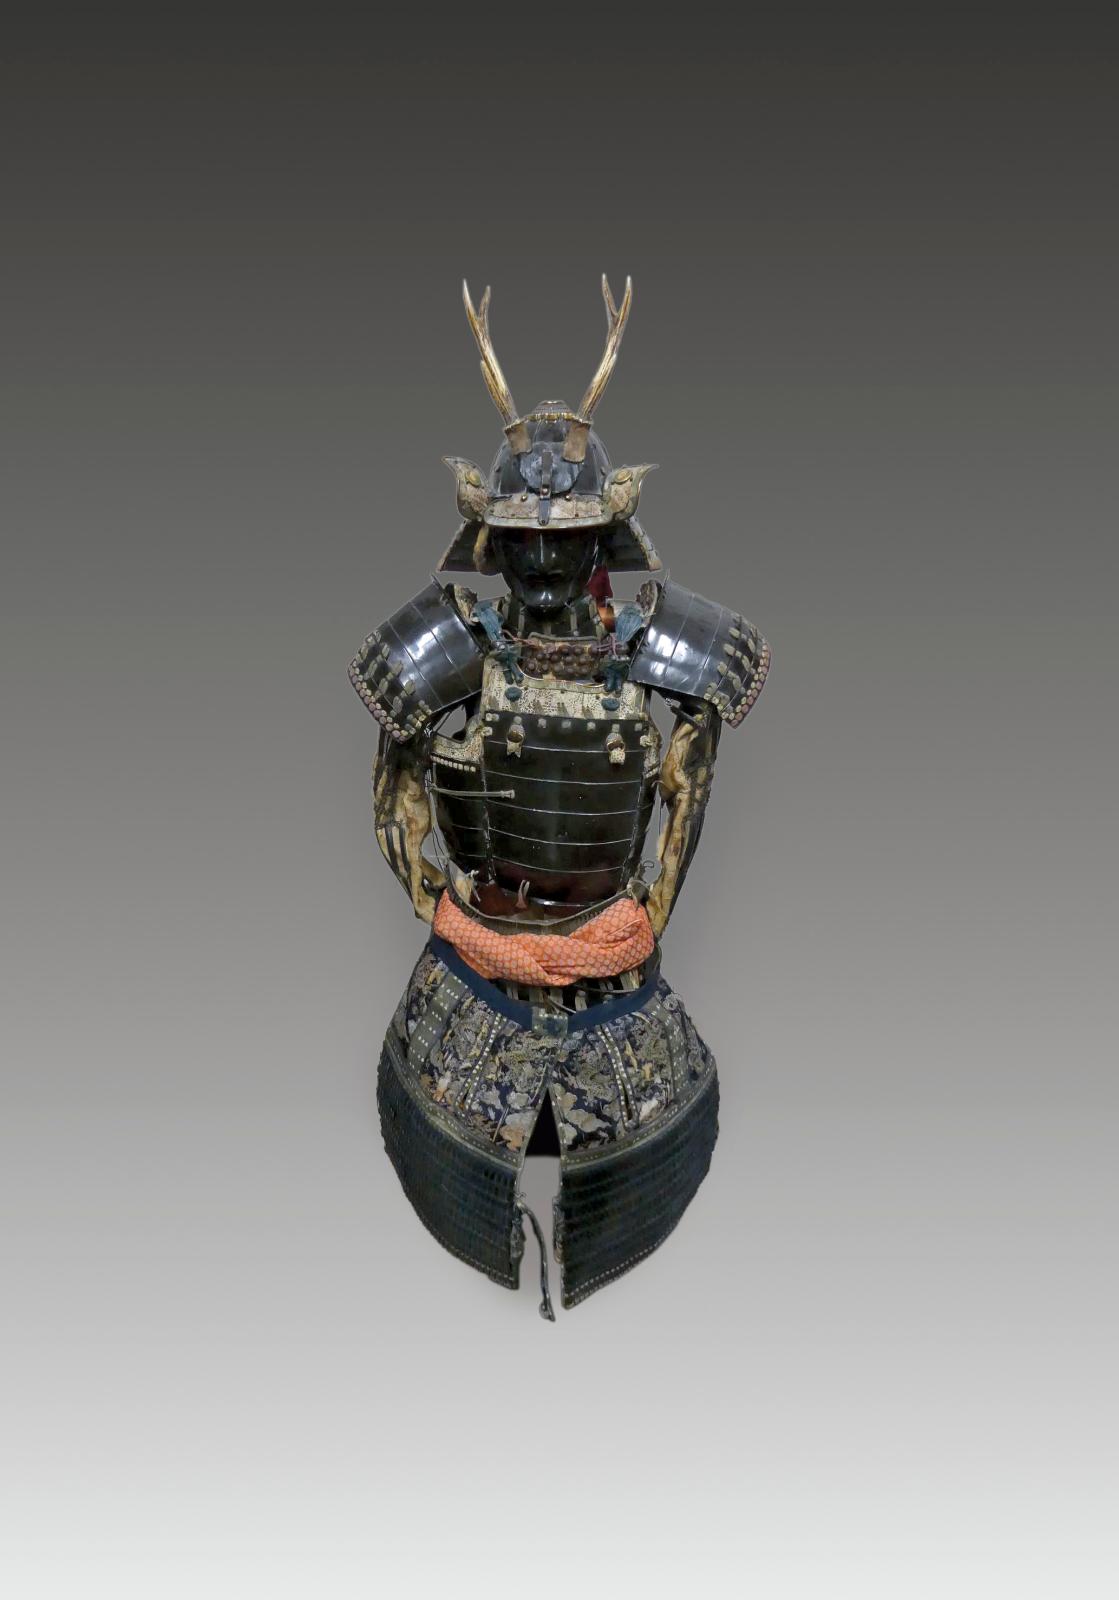 Armure de samouraï